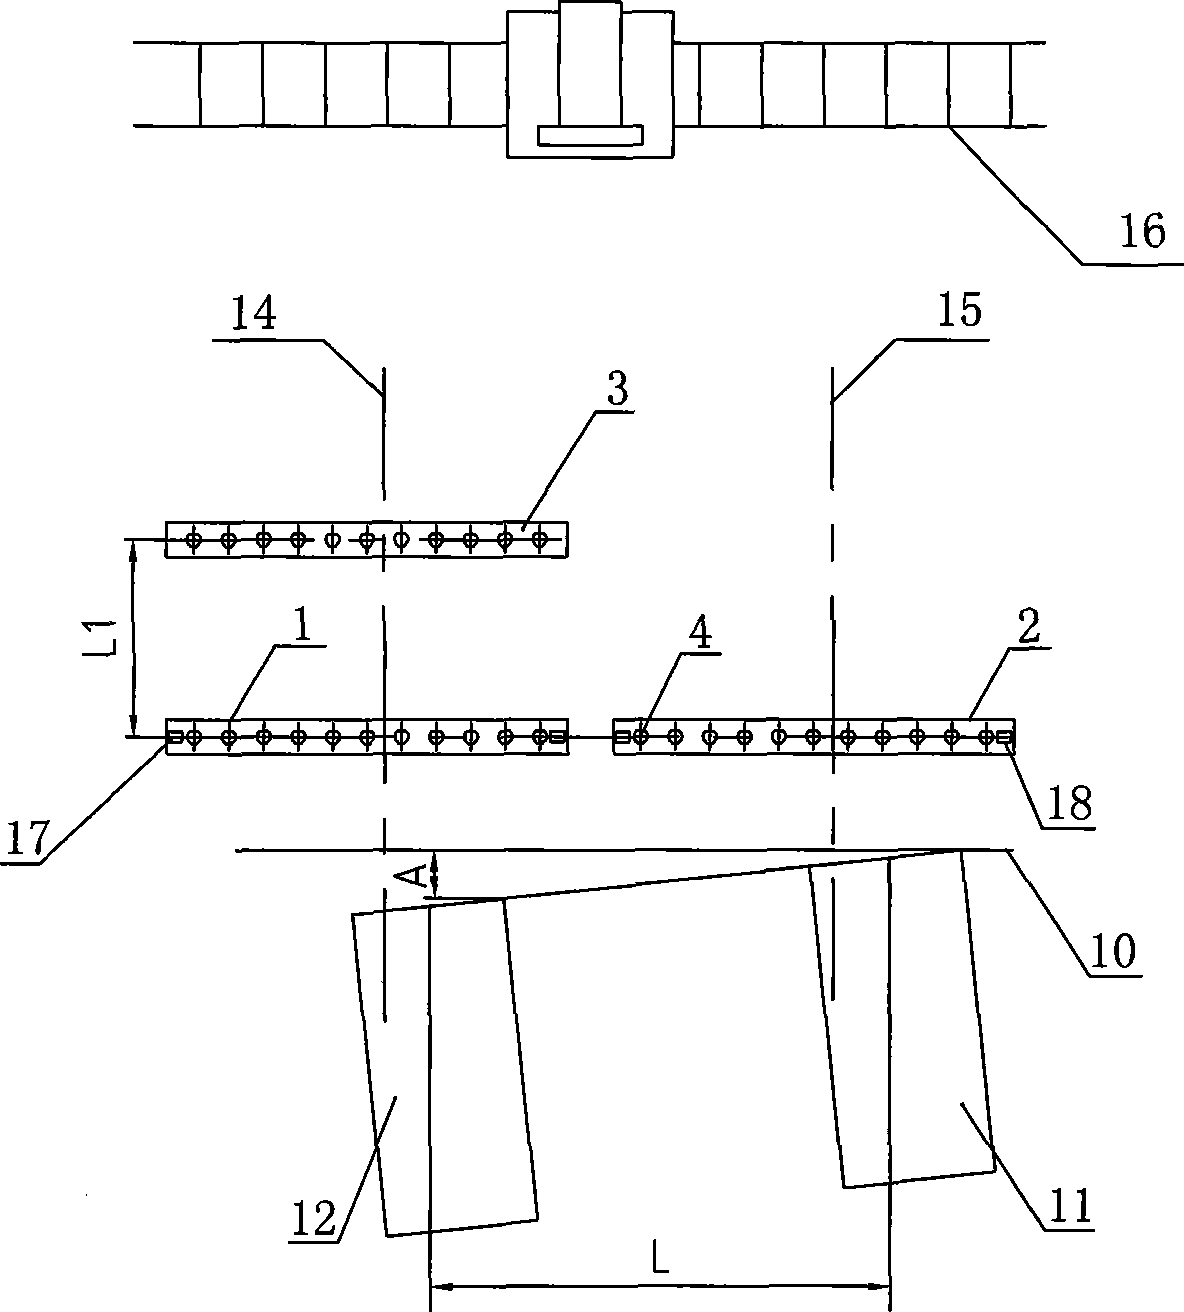 Automobile position auto-induction apparatus